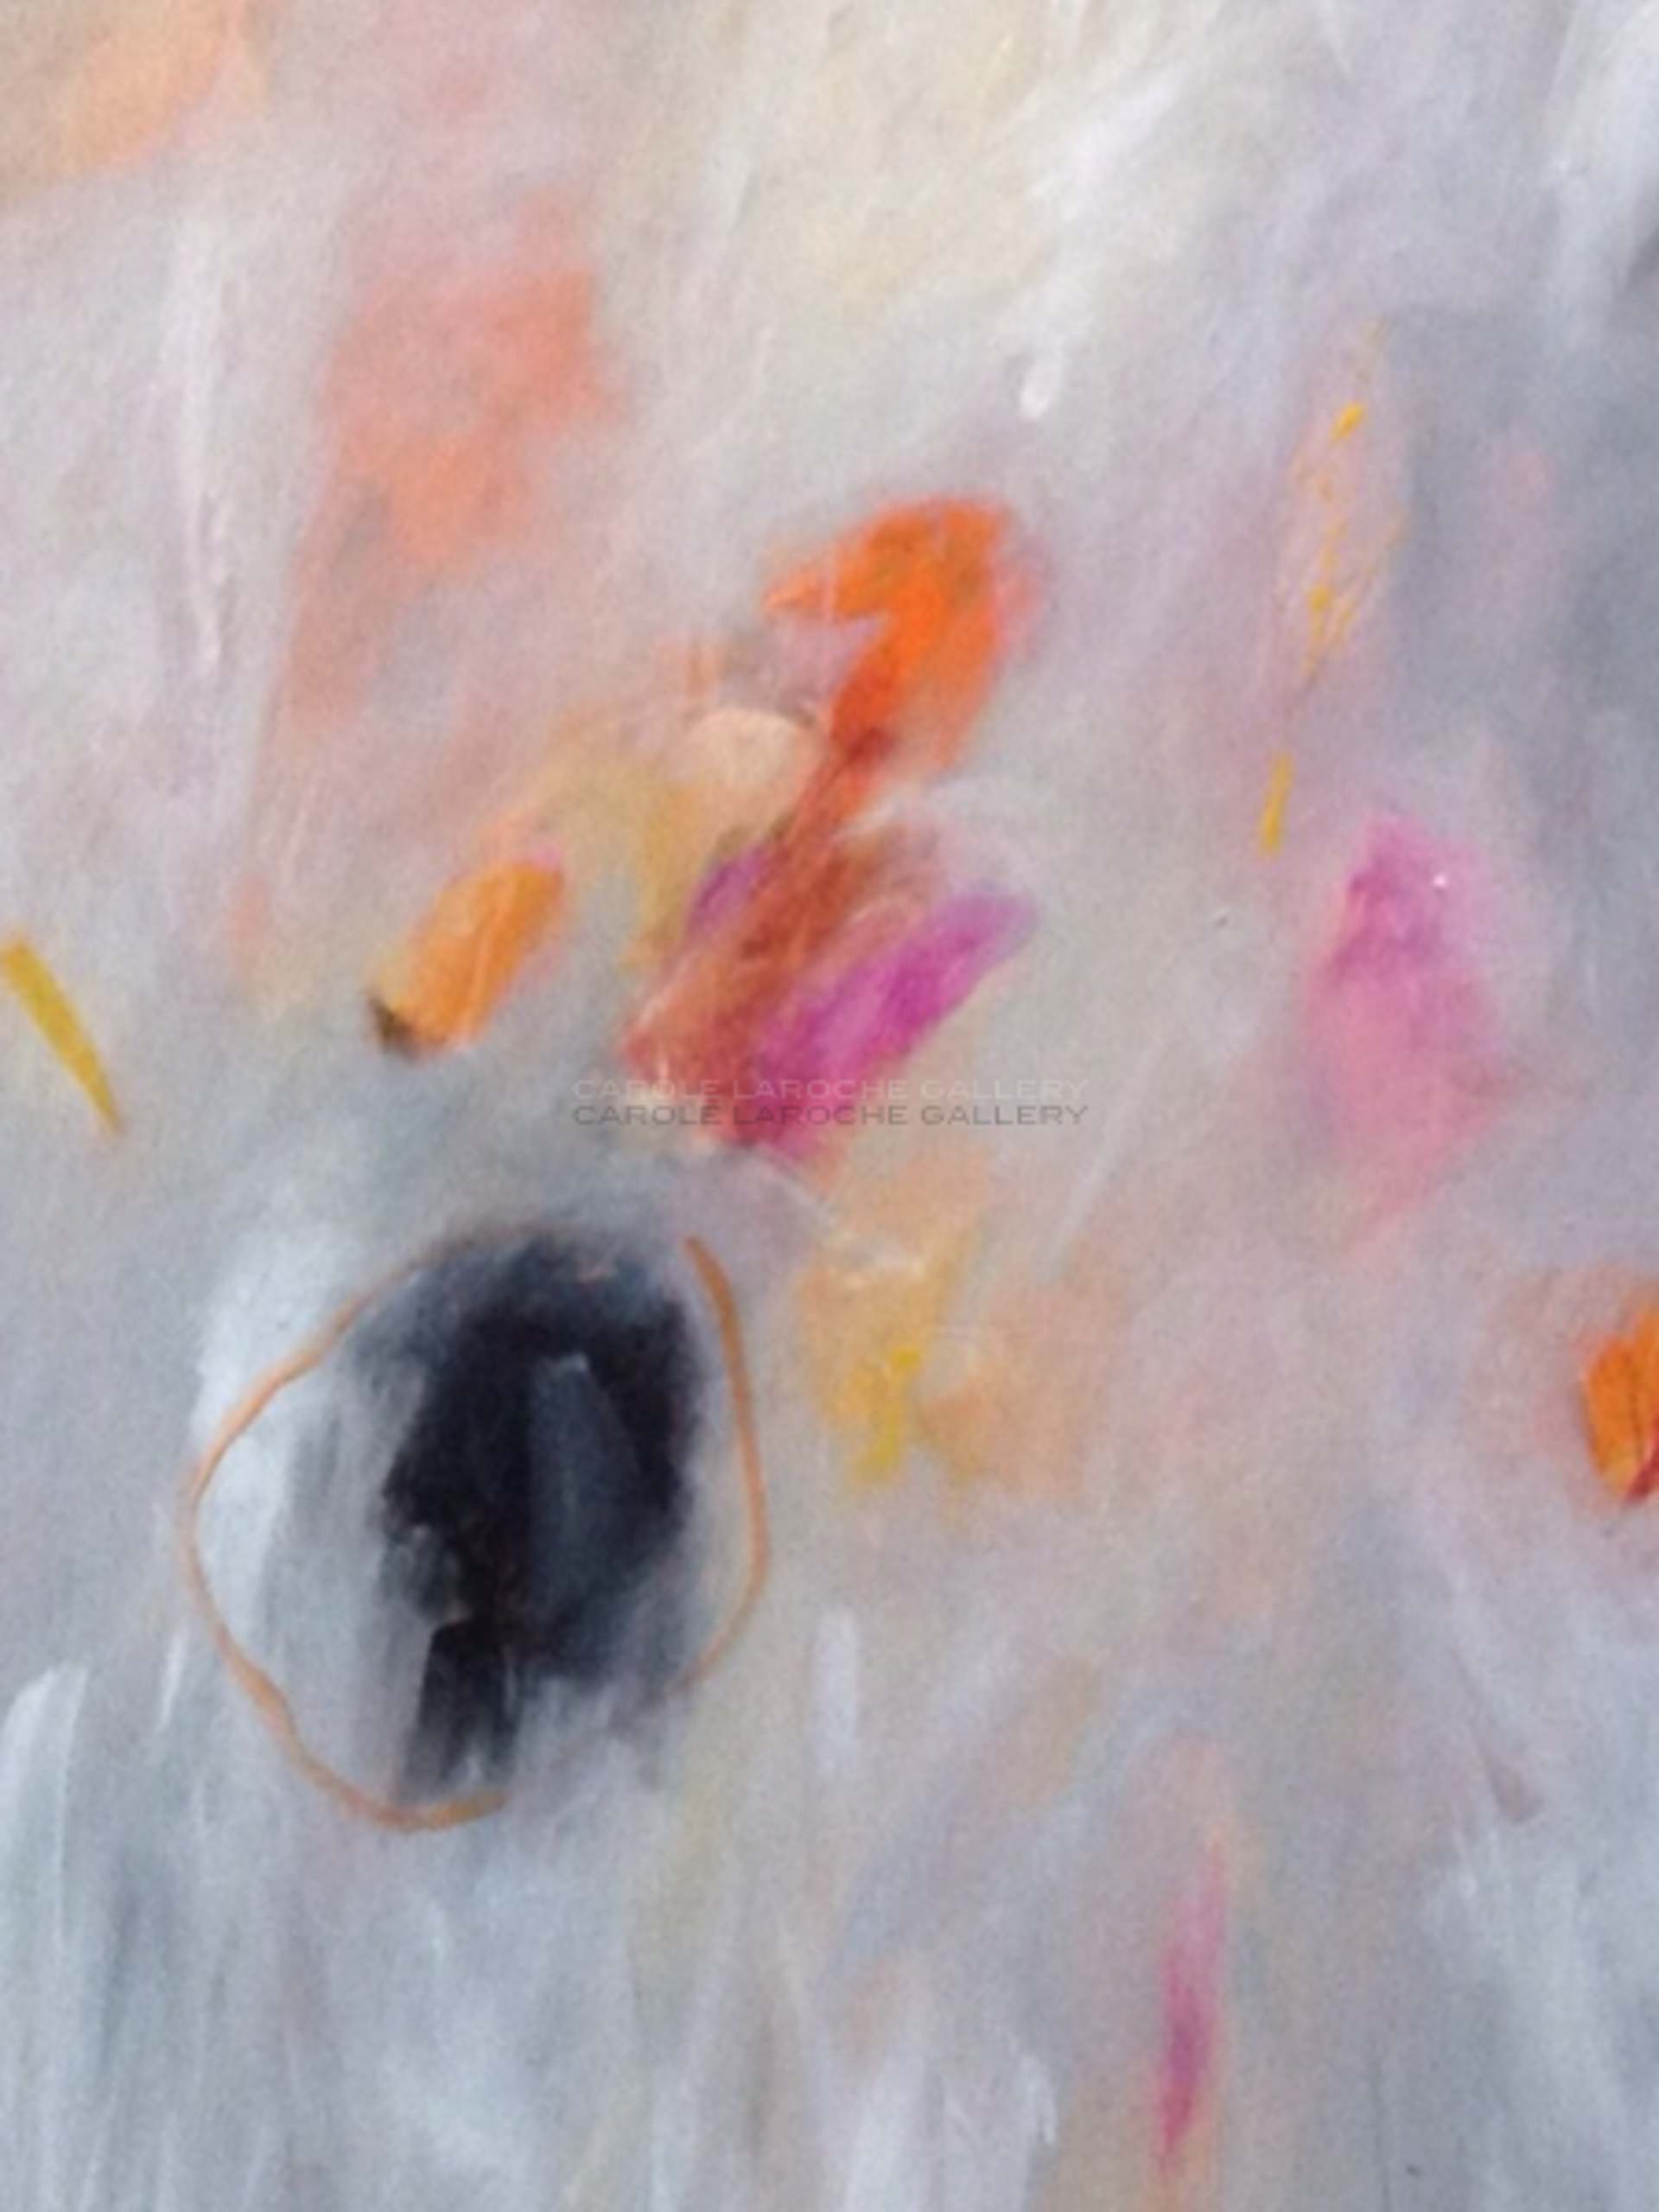 Genesis #1 Abstract   by Carole LaRoche